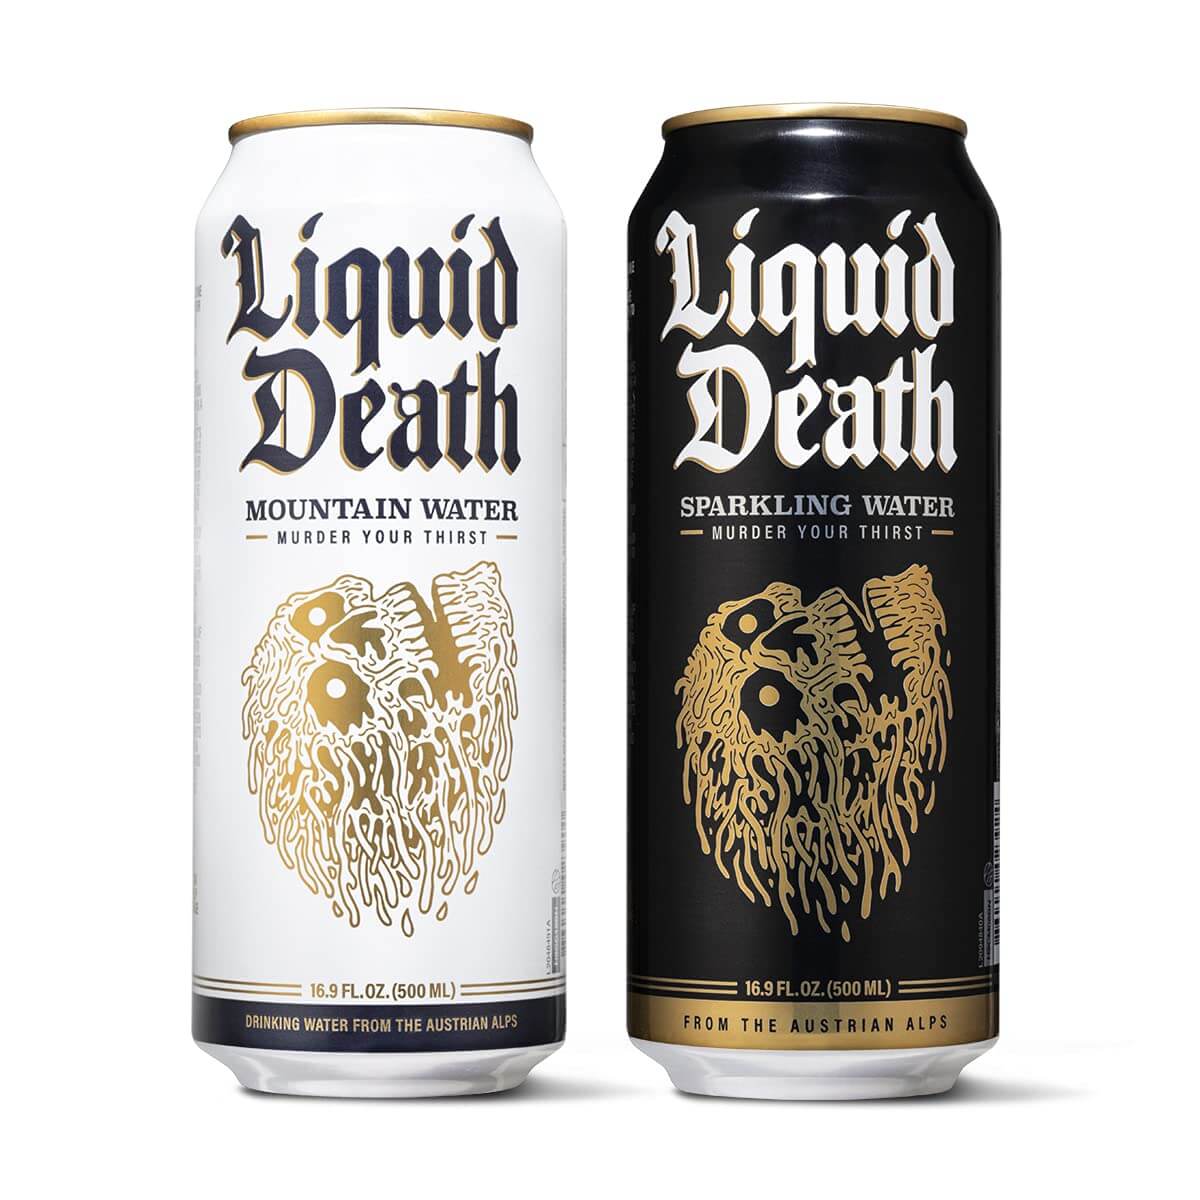 Liquid death's edgy branding